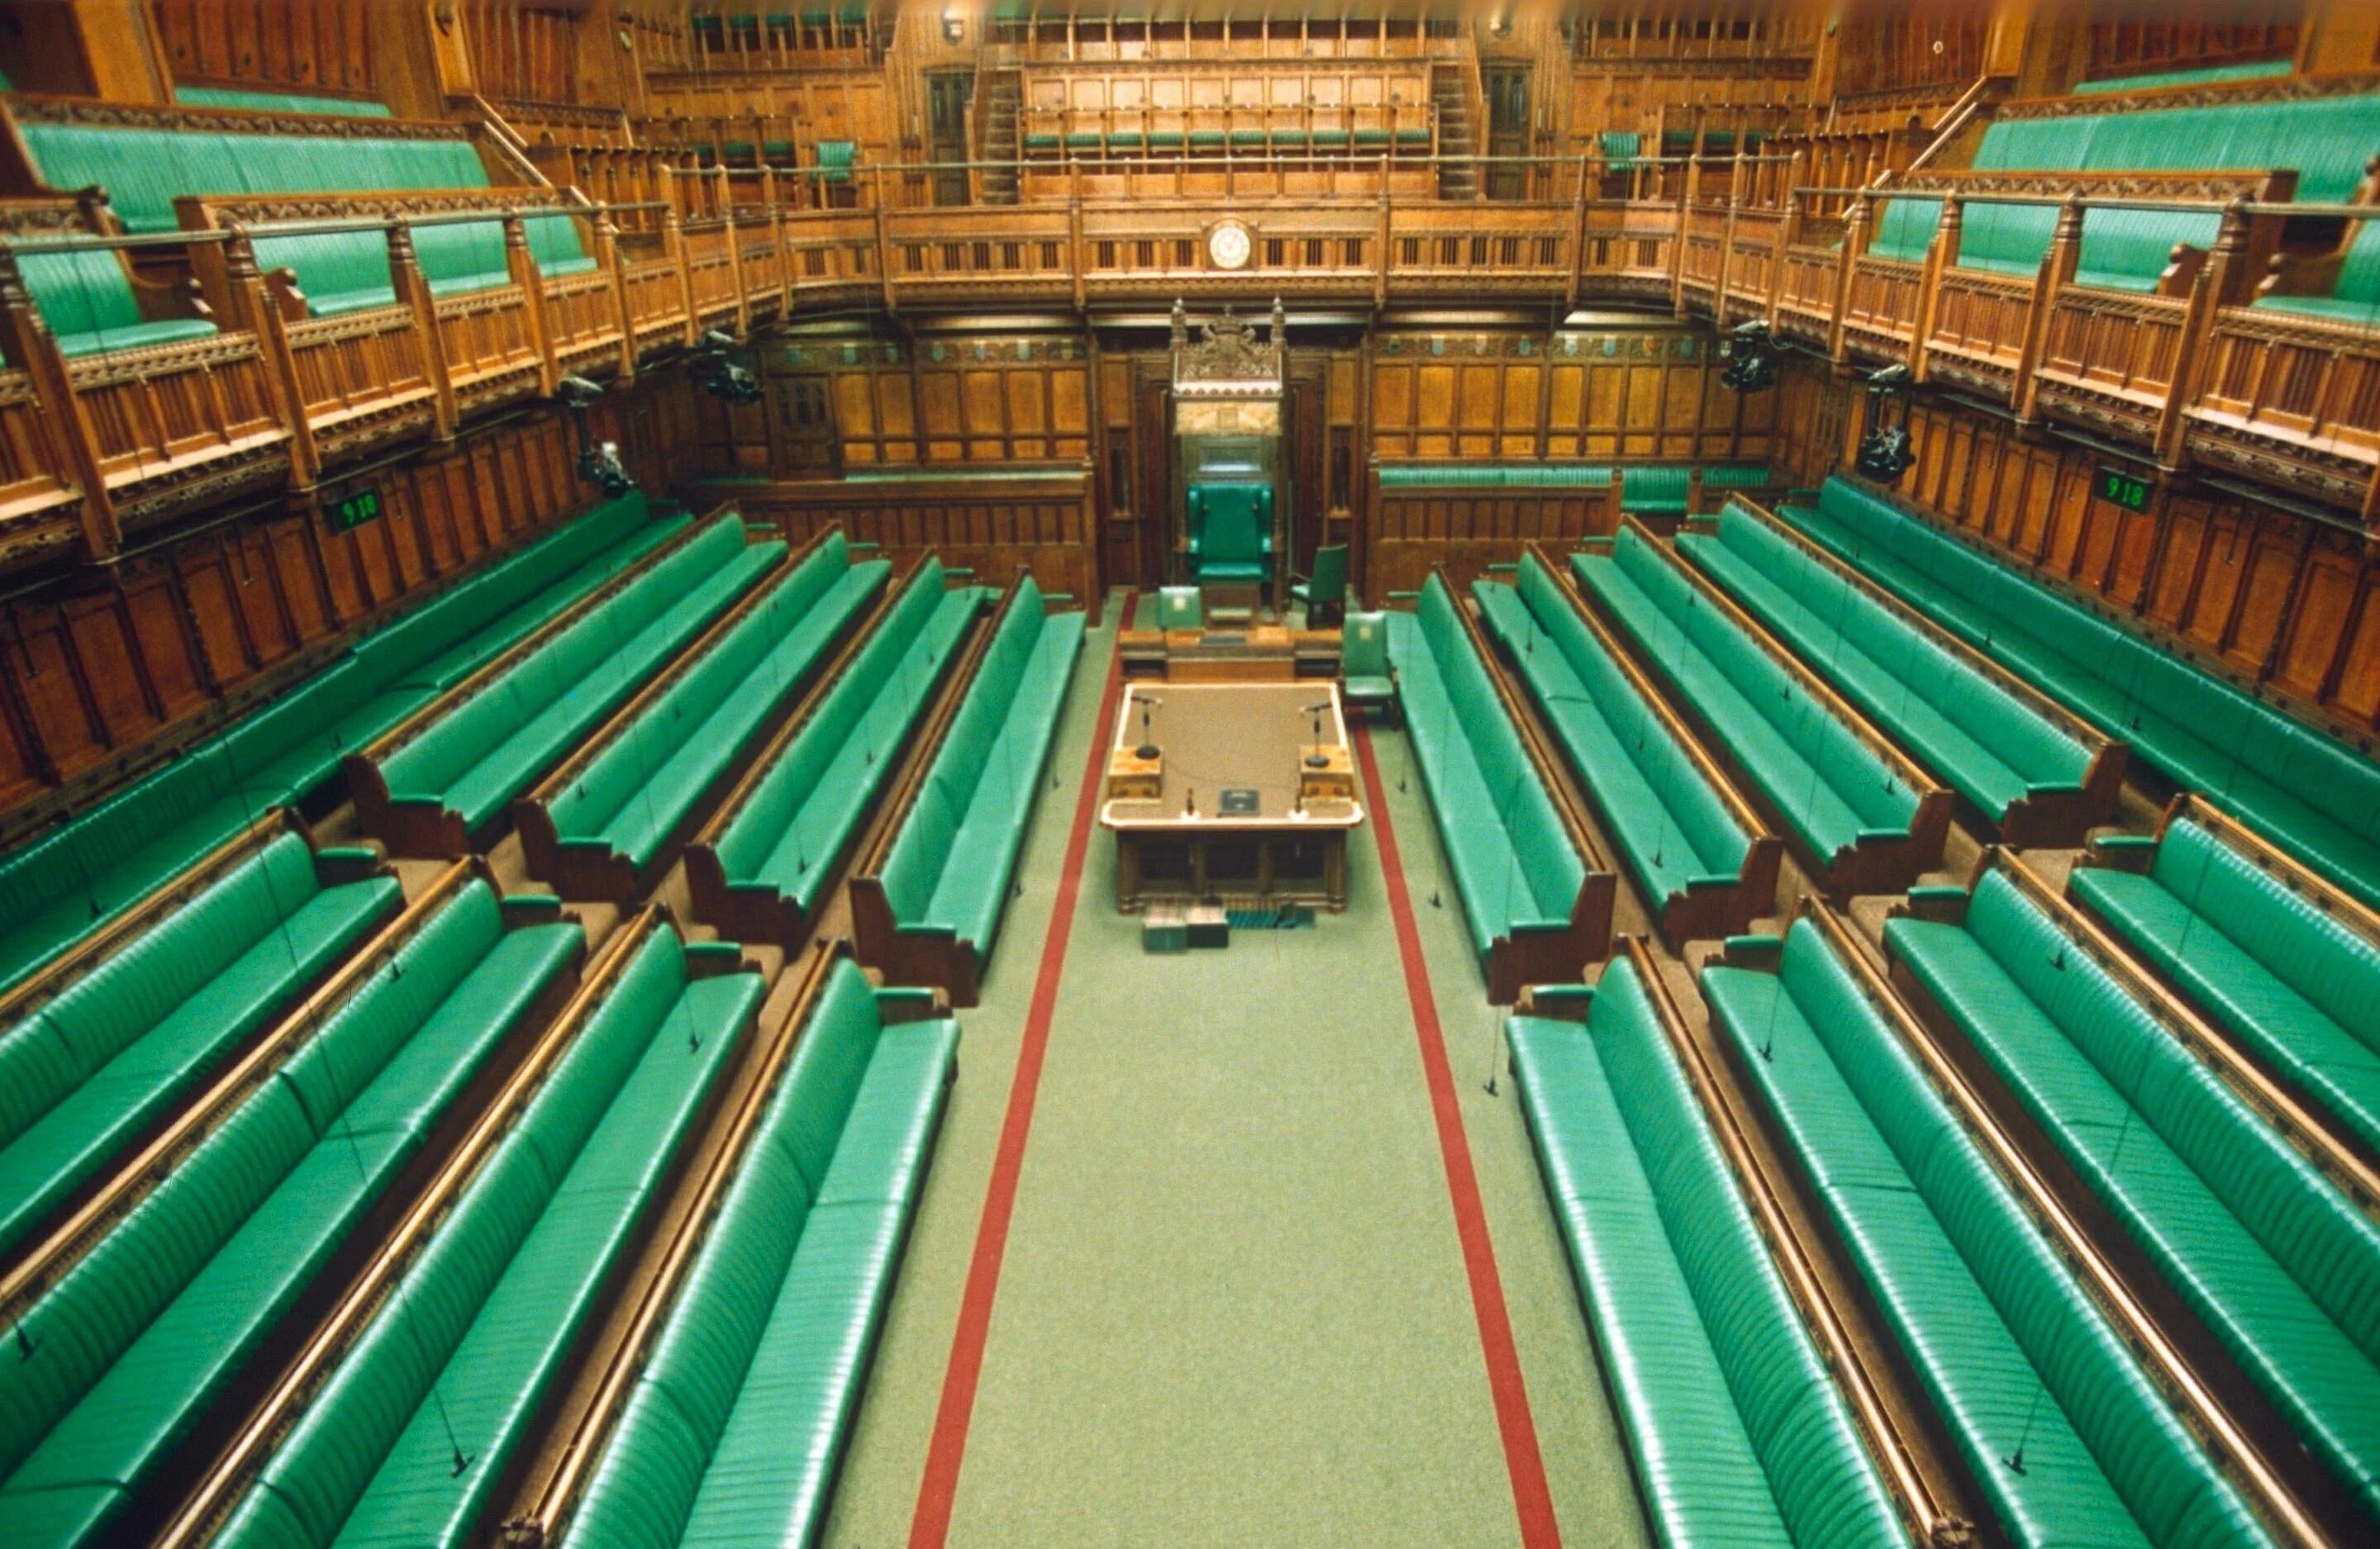 2 the house of commons. Палаты общин (House of Commons). Парламент Великобритании палата общин. Палата общин Великобритании зал. Заседание палаты общин Великобритании.